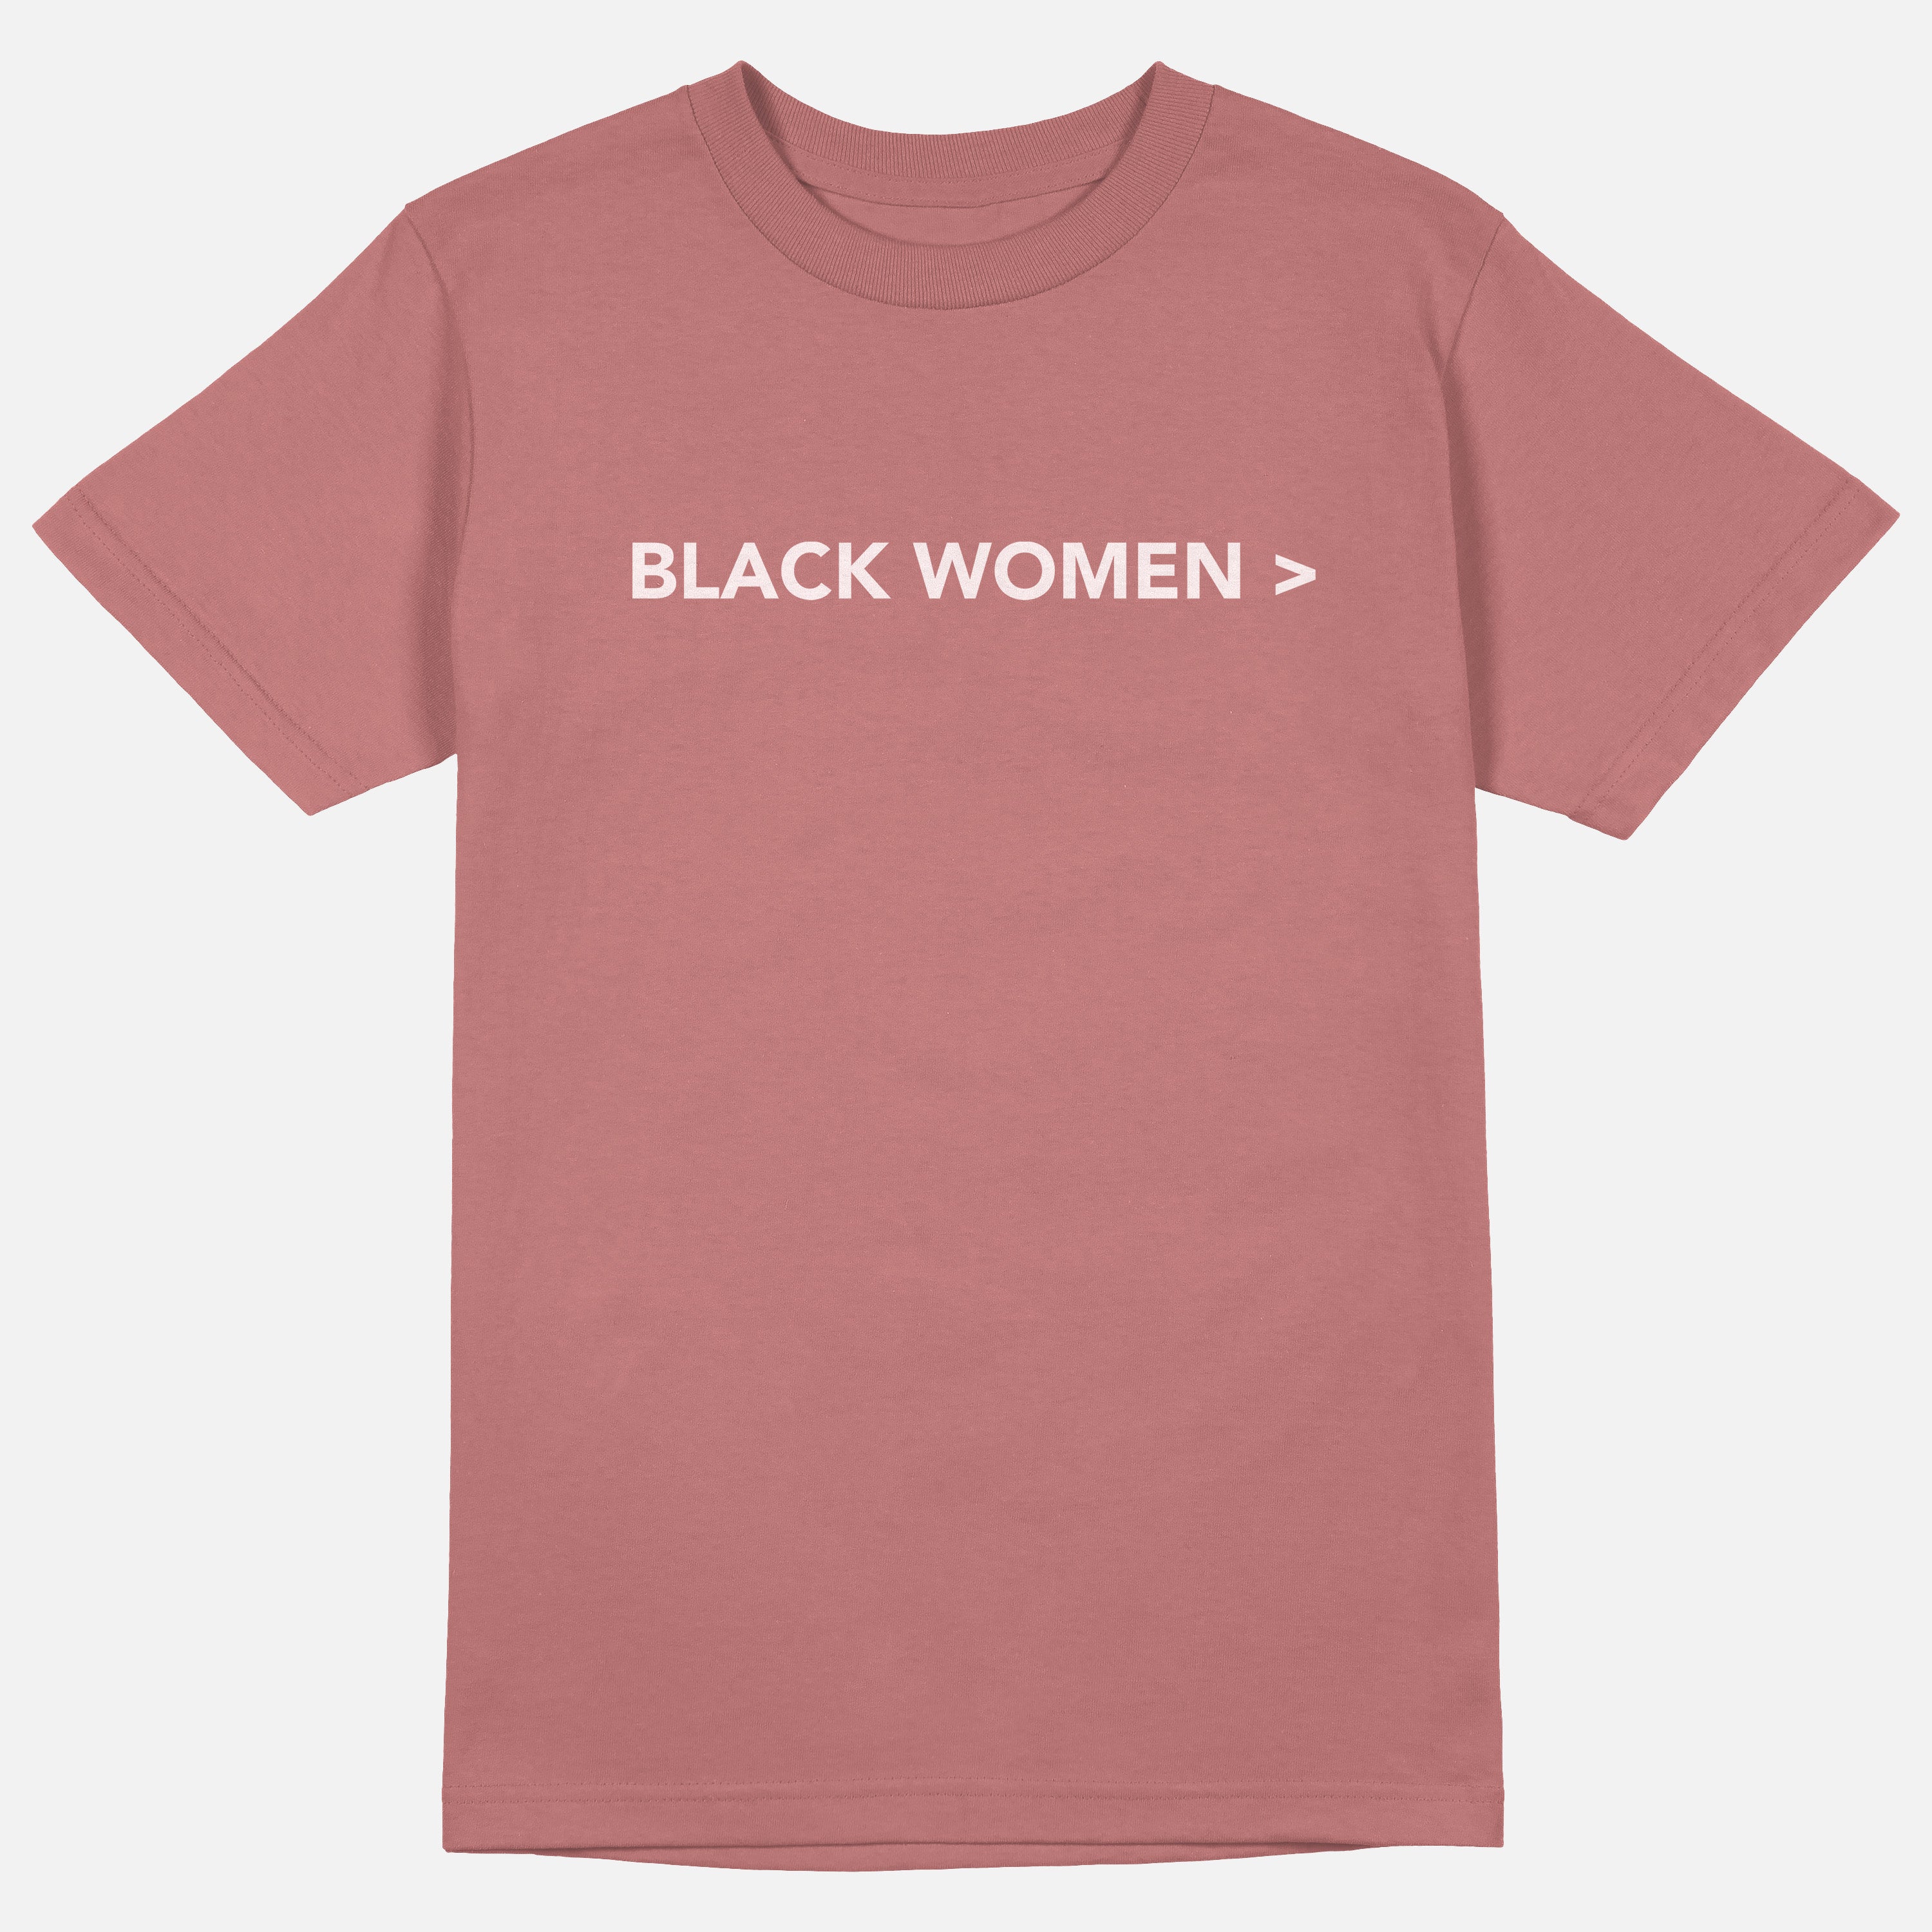 Black Women >  | Tee